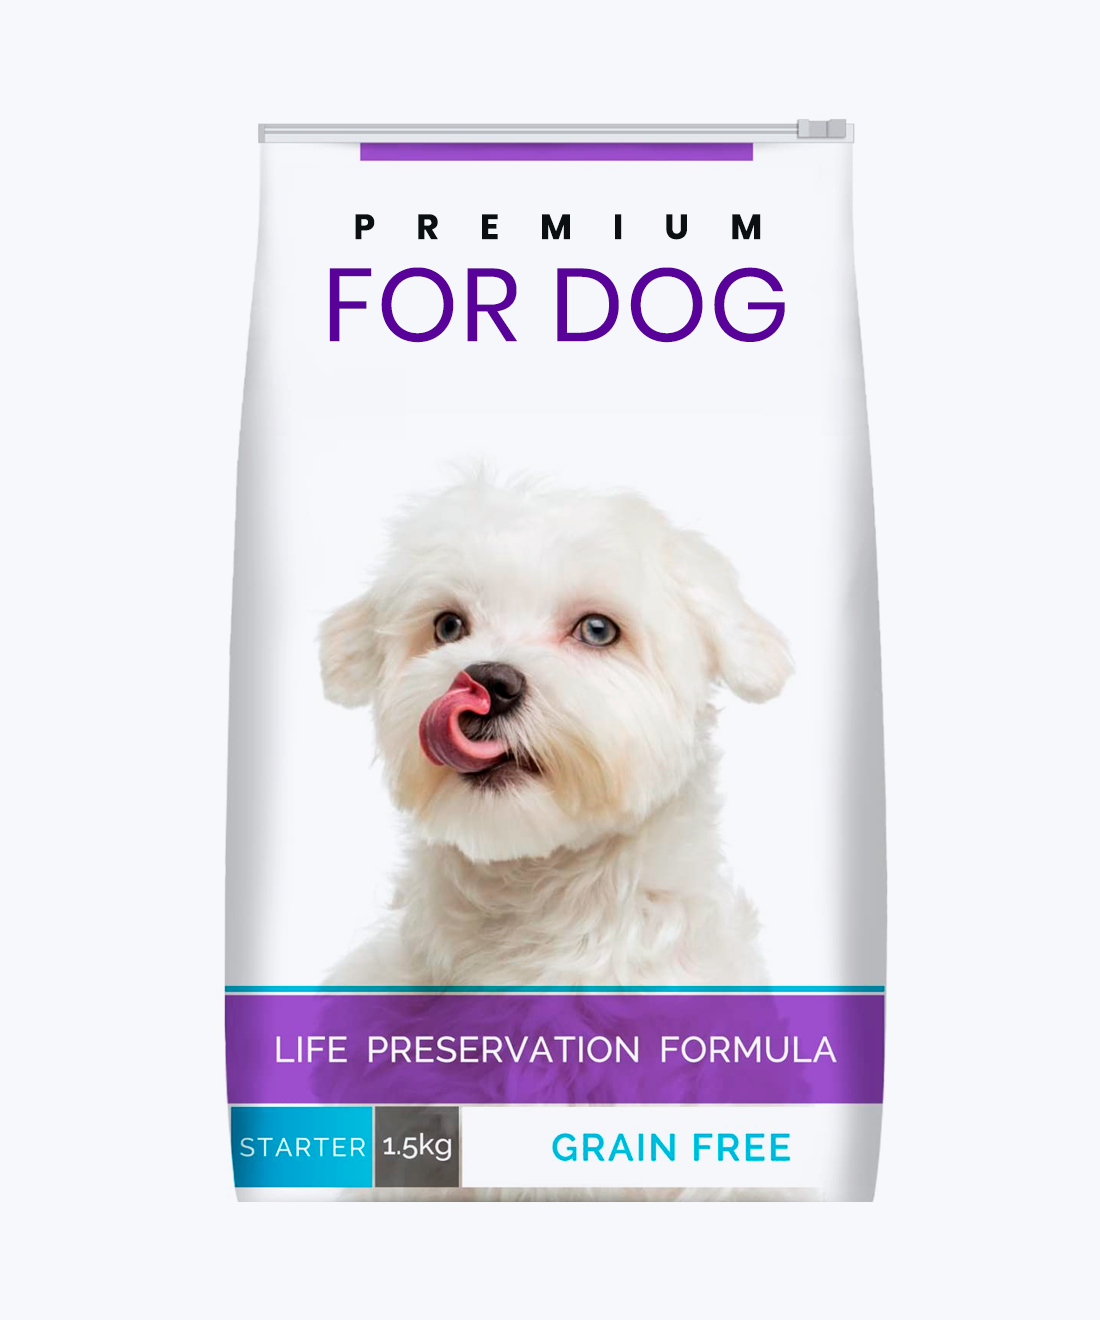 Premum dog food